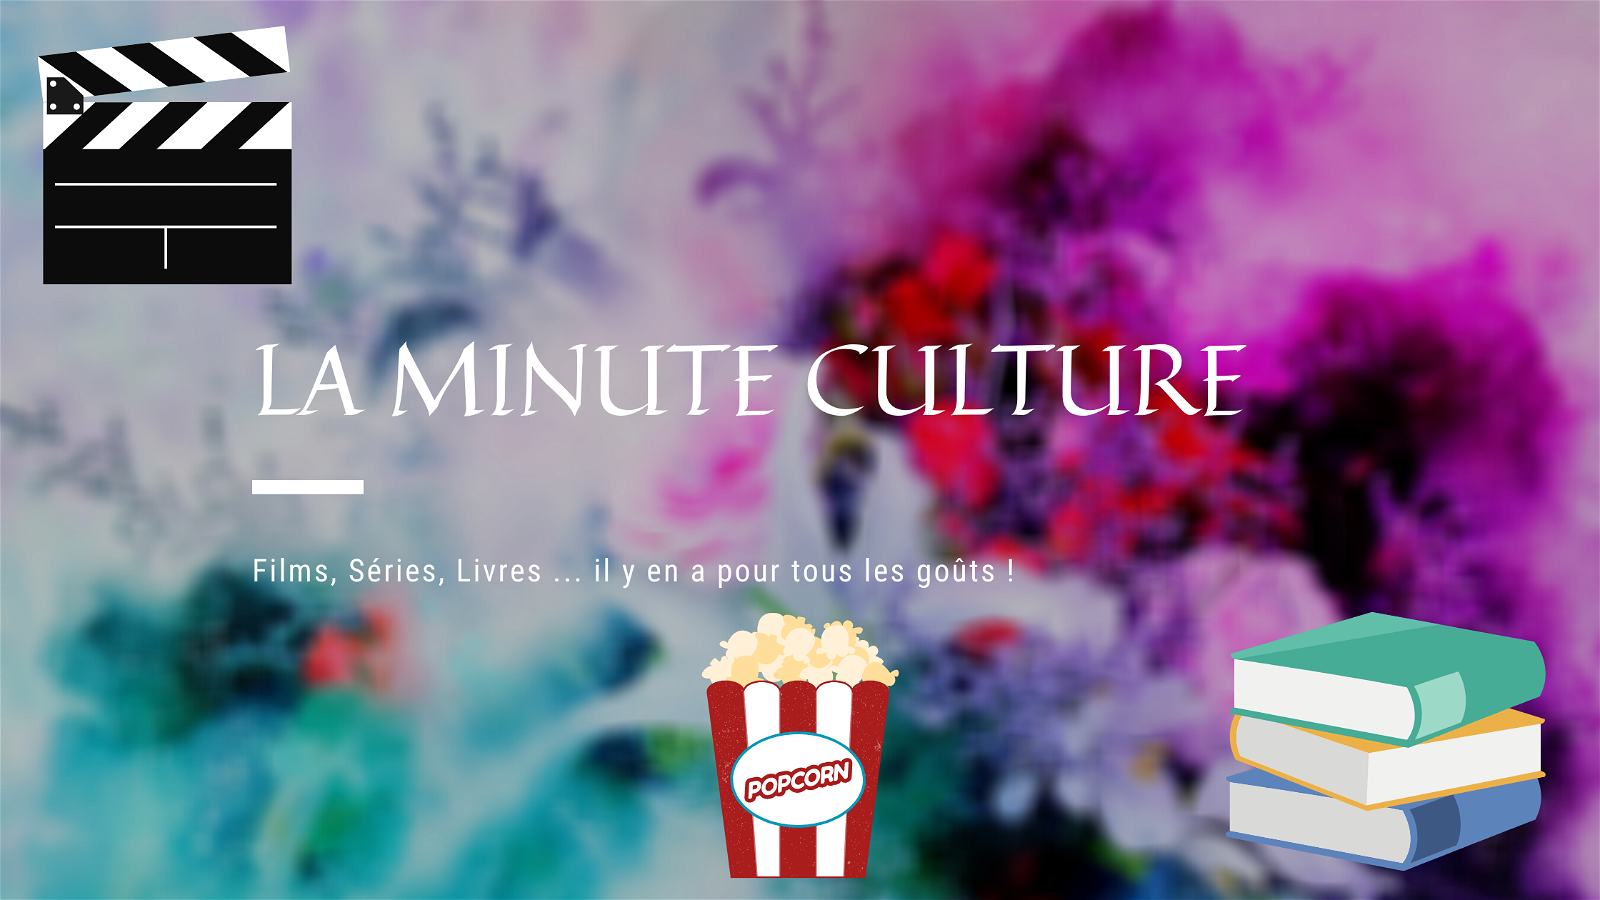 La minute culture - épisode 3